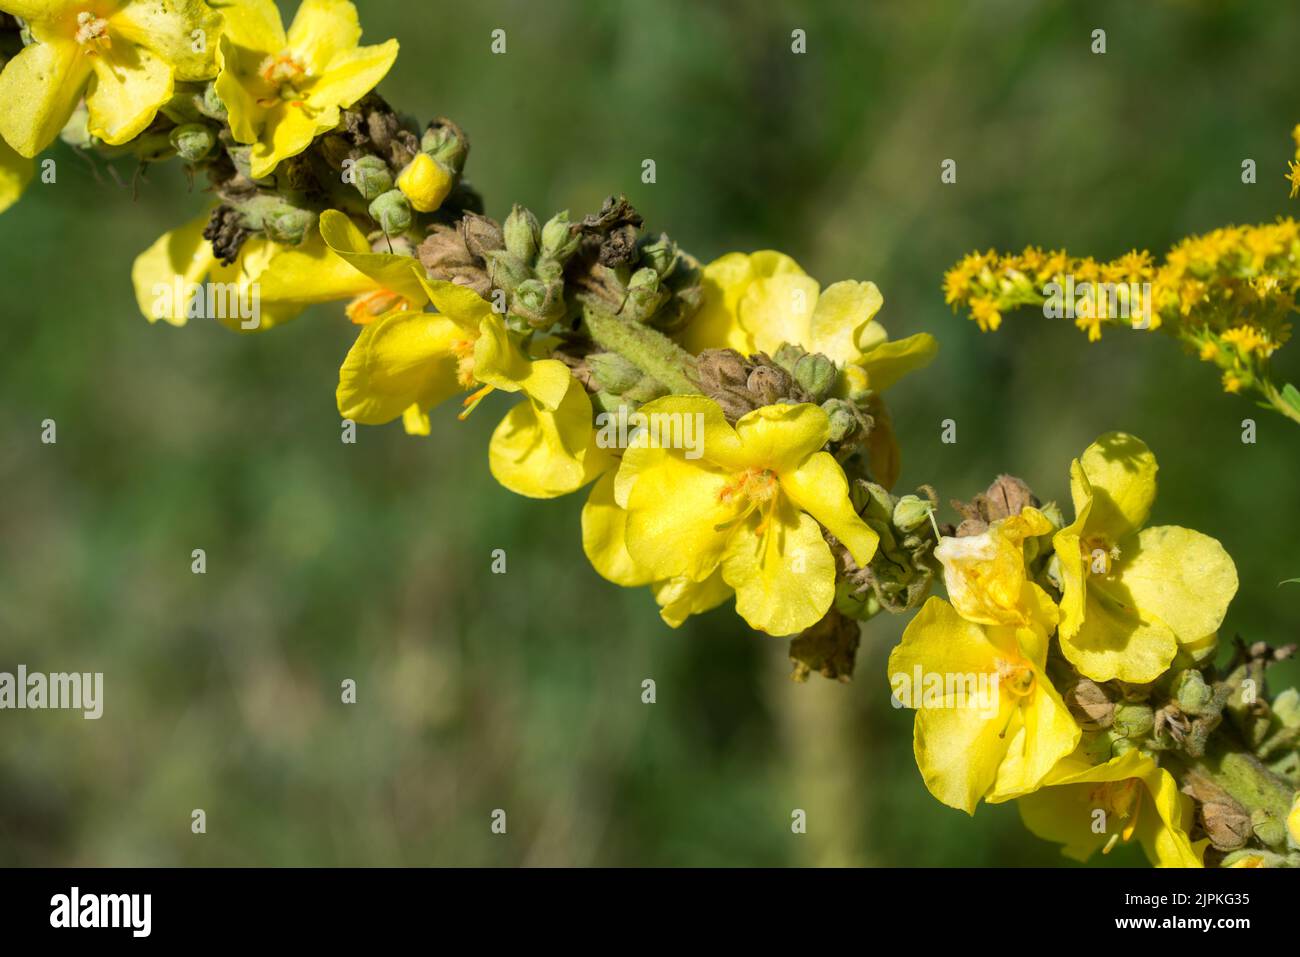 Verbascum thapsus, gran mullein verano flores amarillas primer plano enfoque selectivo Foto de stock